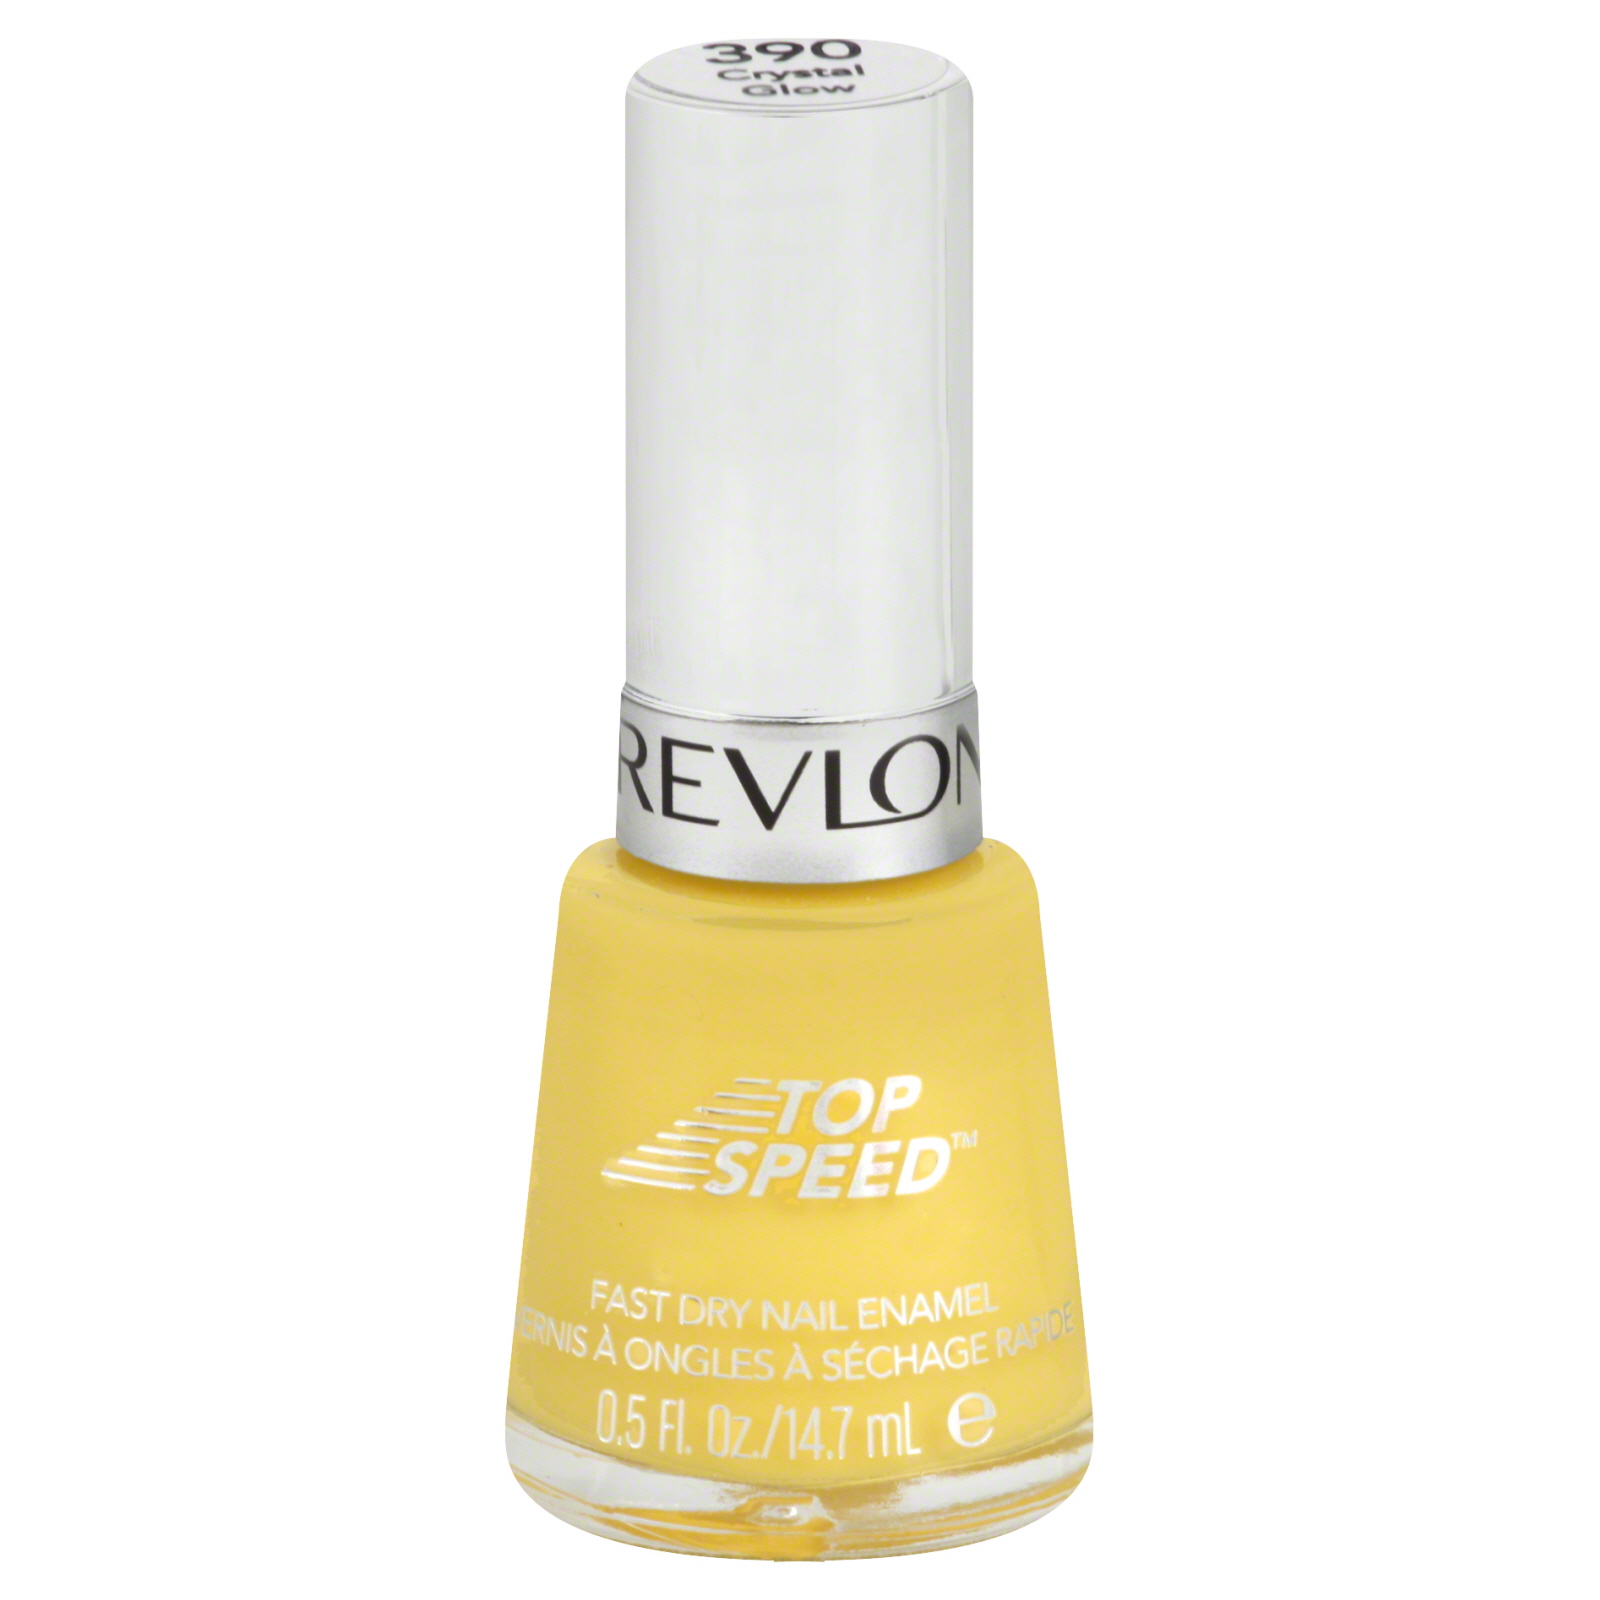 Top Speed Nail Enamel, Fast Dry, Crystal Glow 390, 0.5 fl oz (14.7 ml)